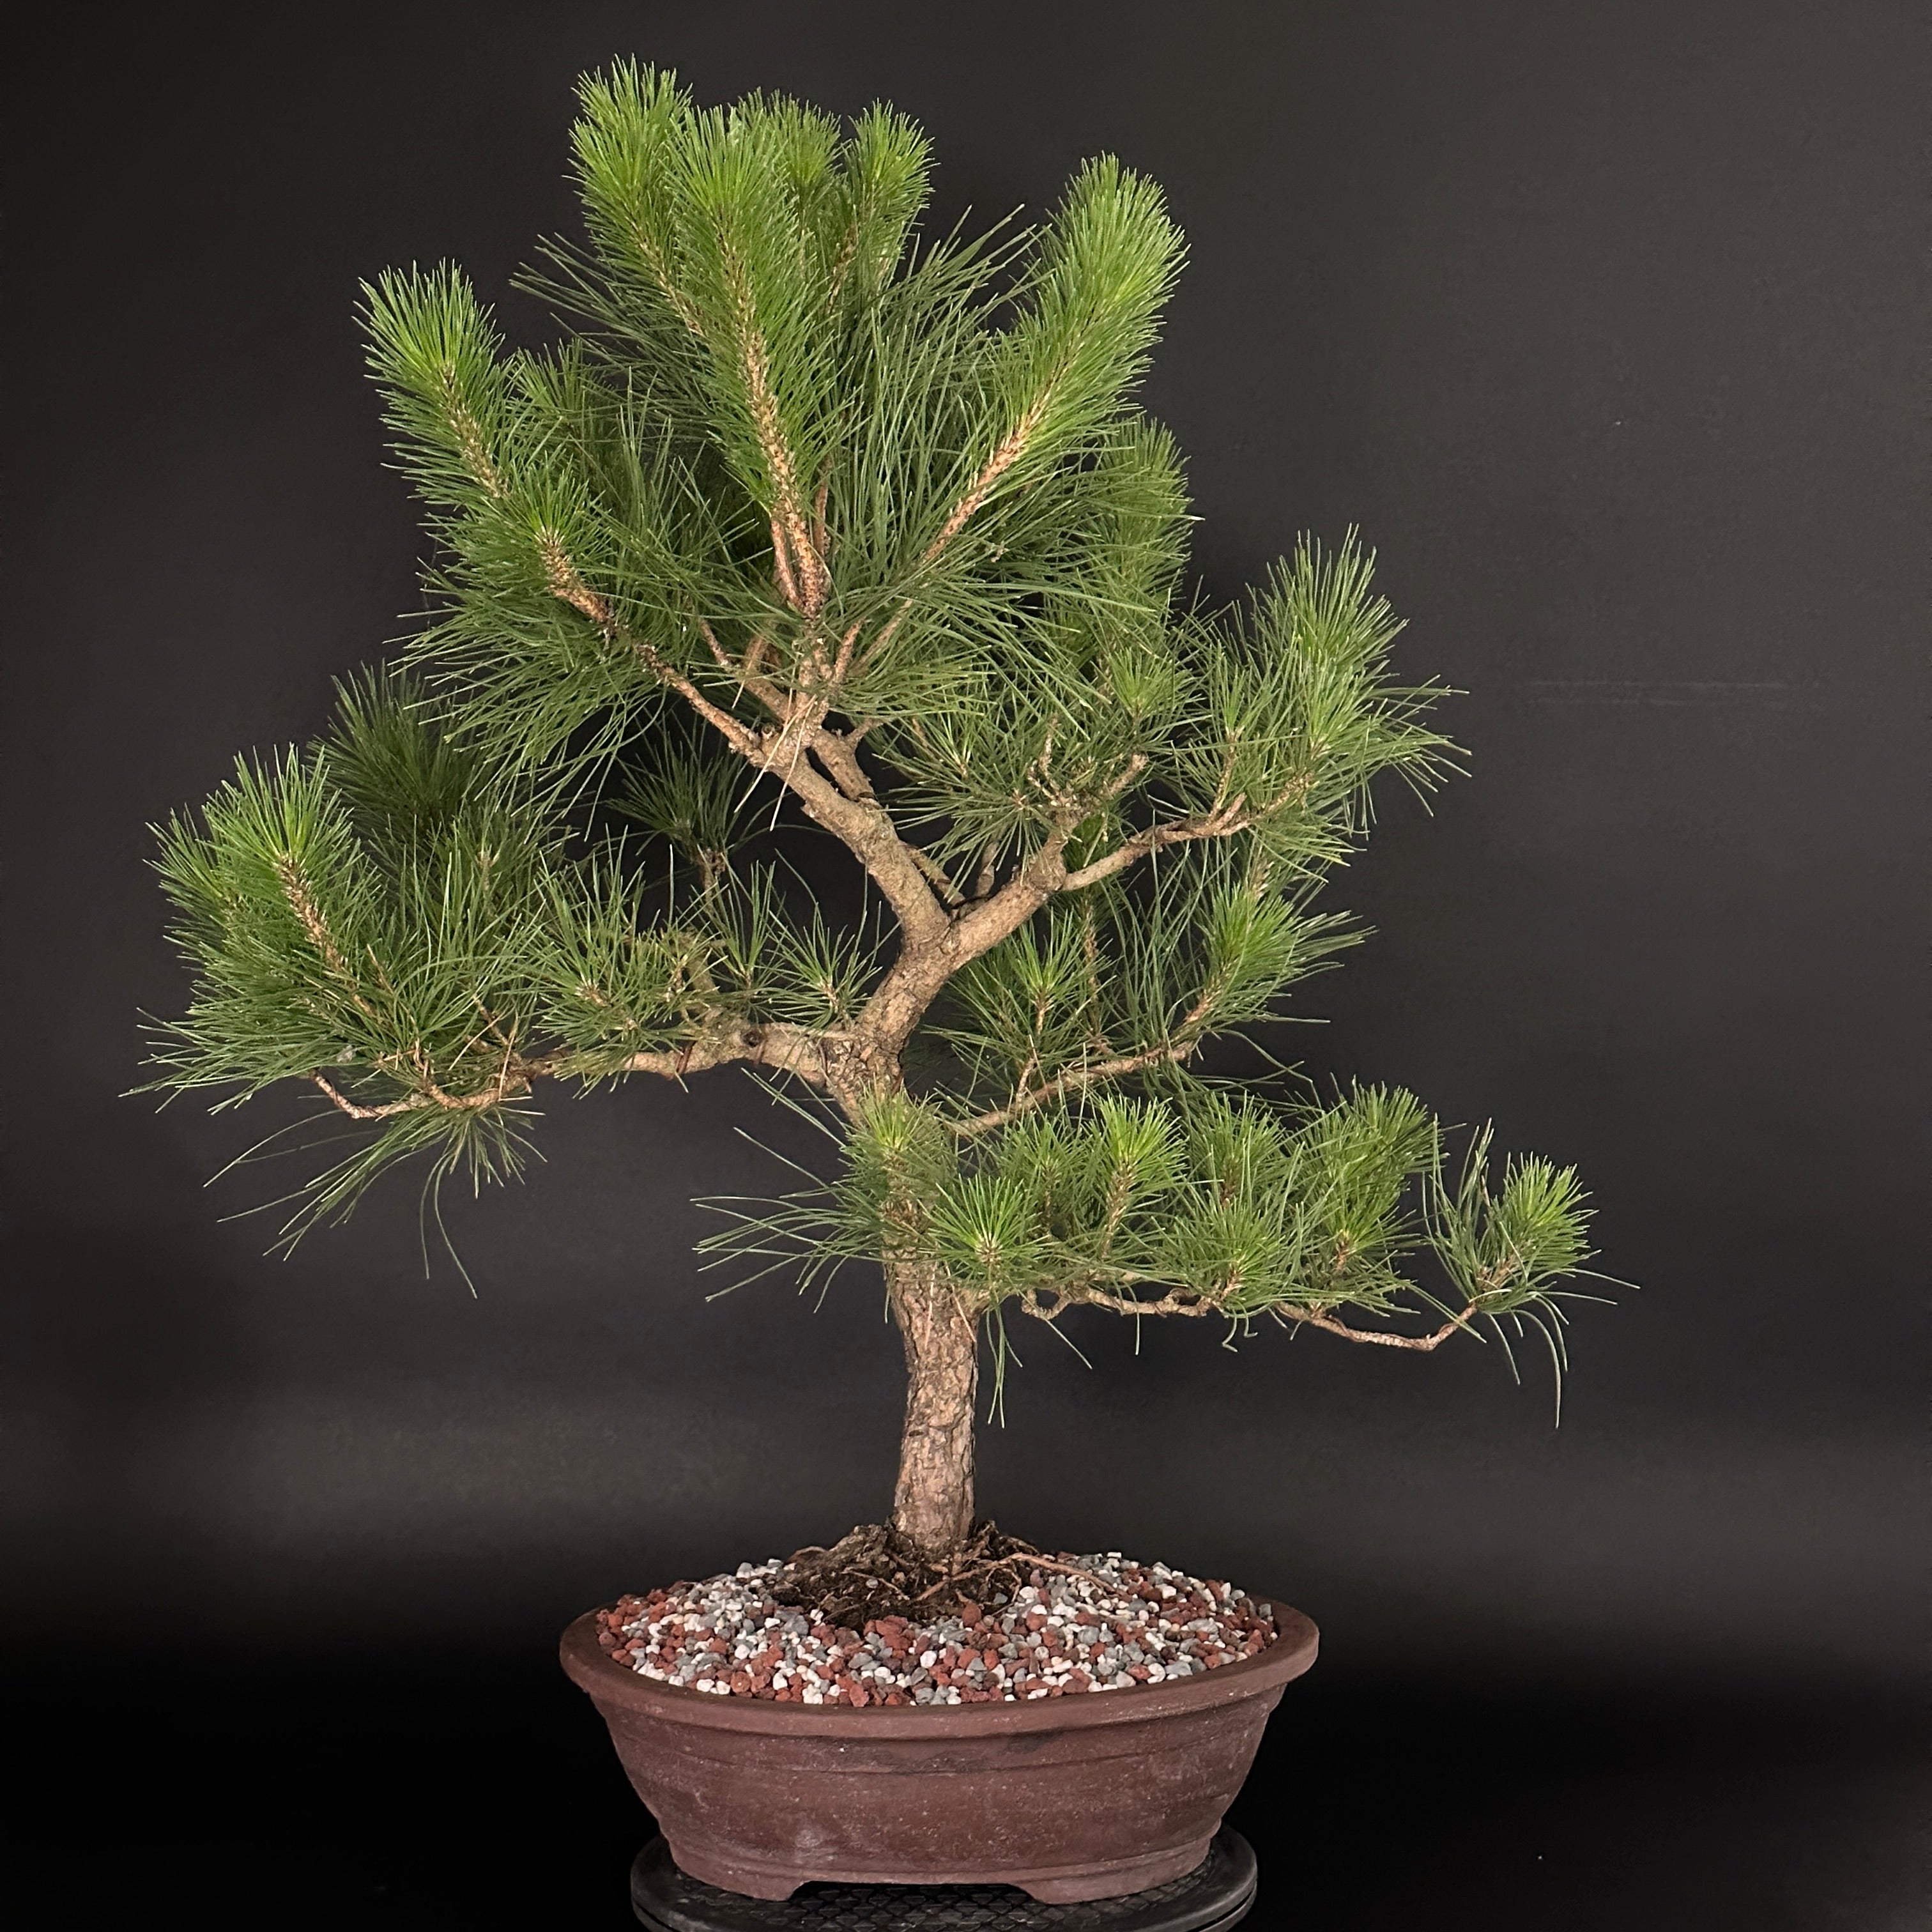 Japanese Black Pine No. 2